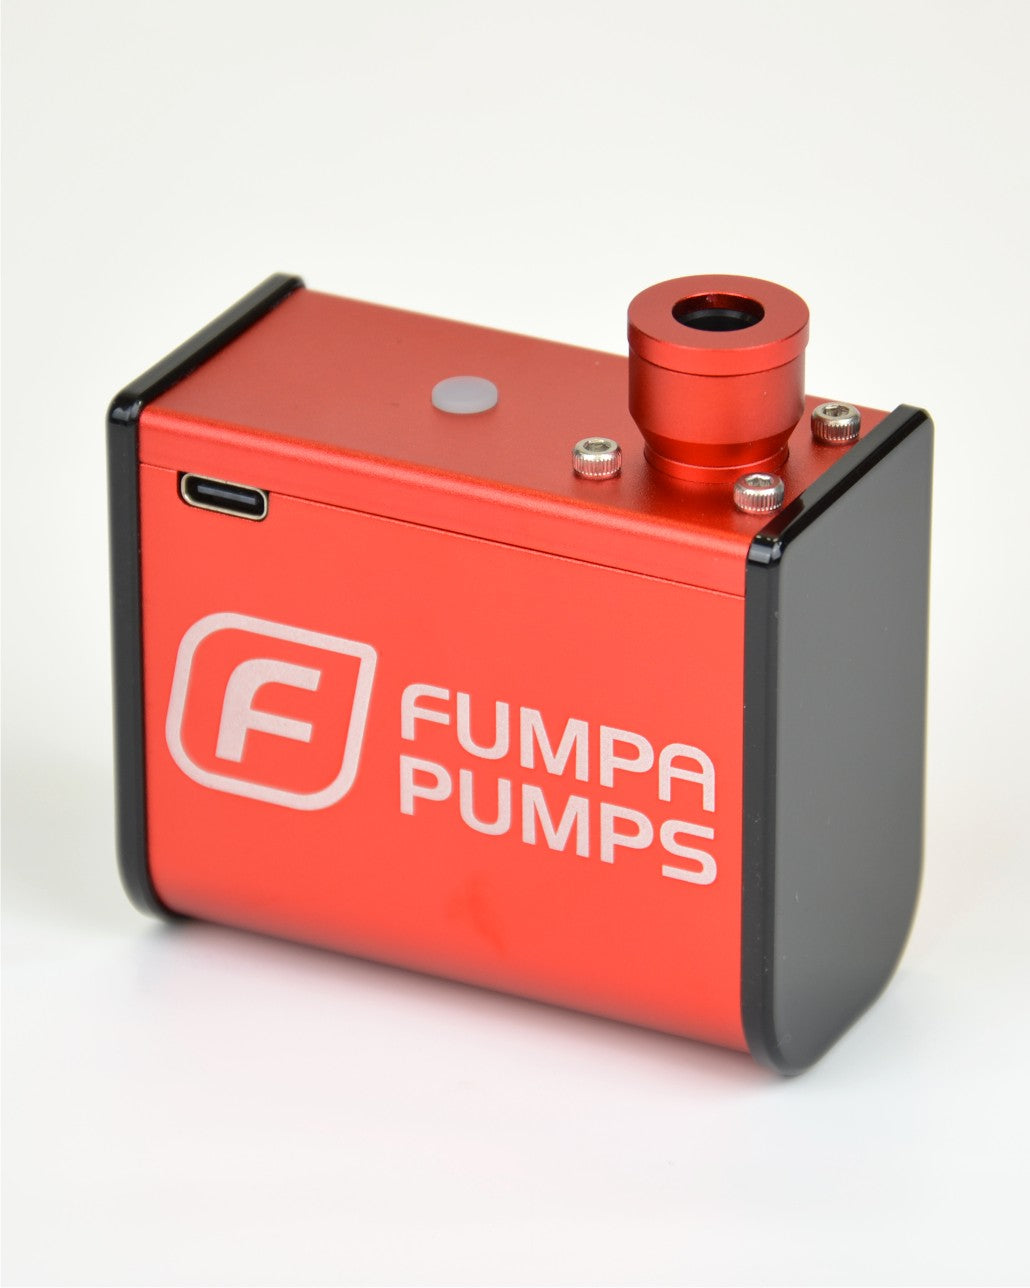 miniFumpa Bike Pump